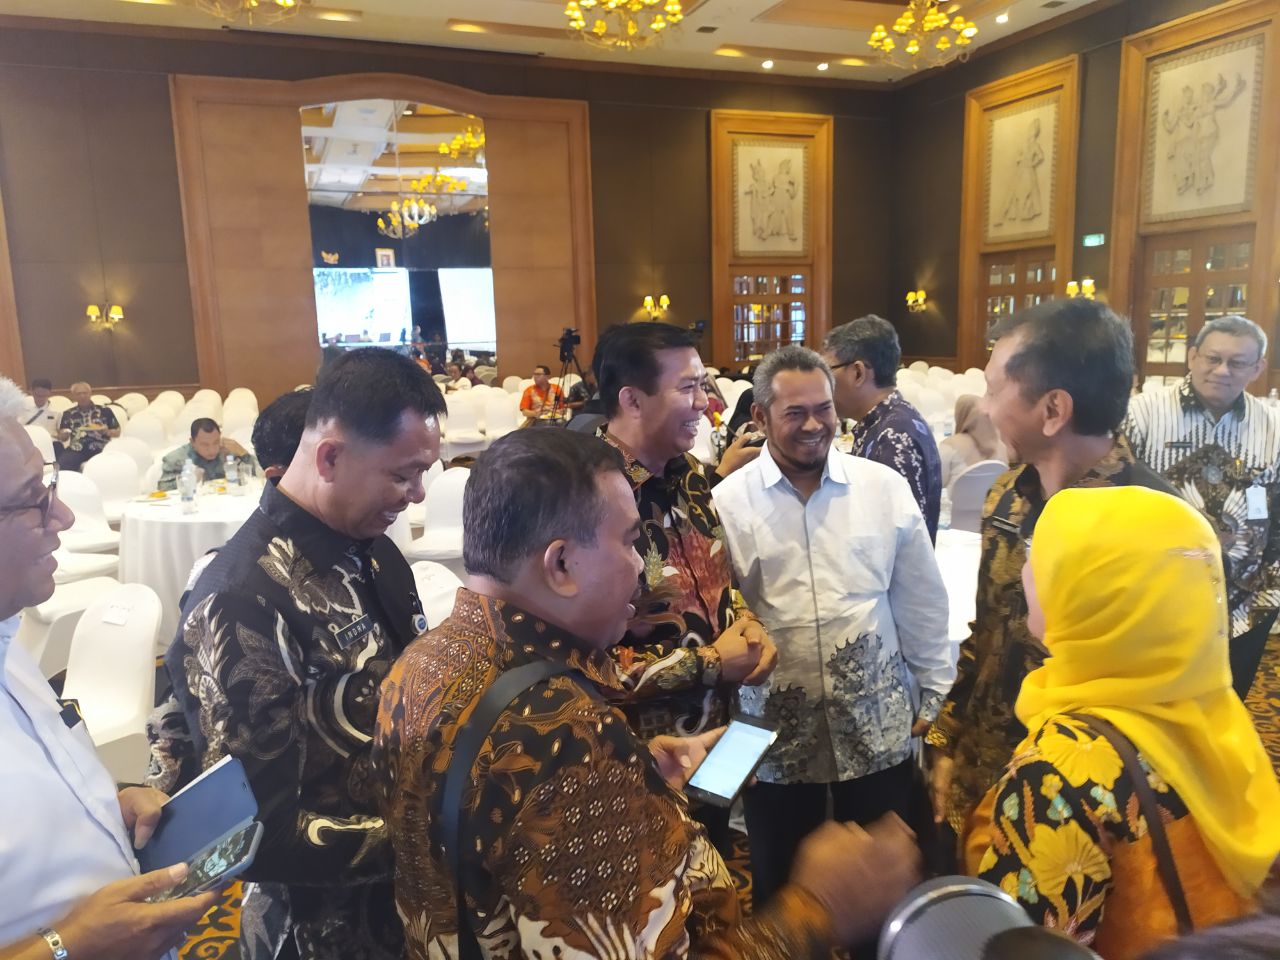 Ketua DPRD Pekanbaru: Semoga RDTR Segera Terwujud, Untuk Pekanbaru Lebih Baik